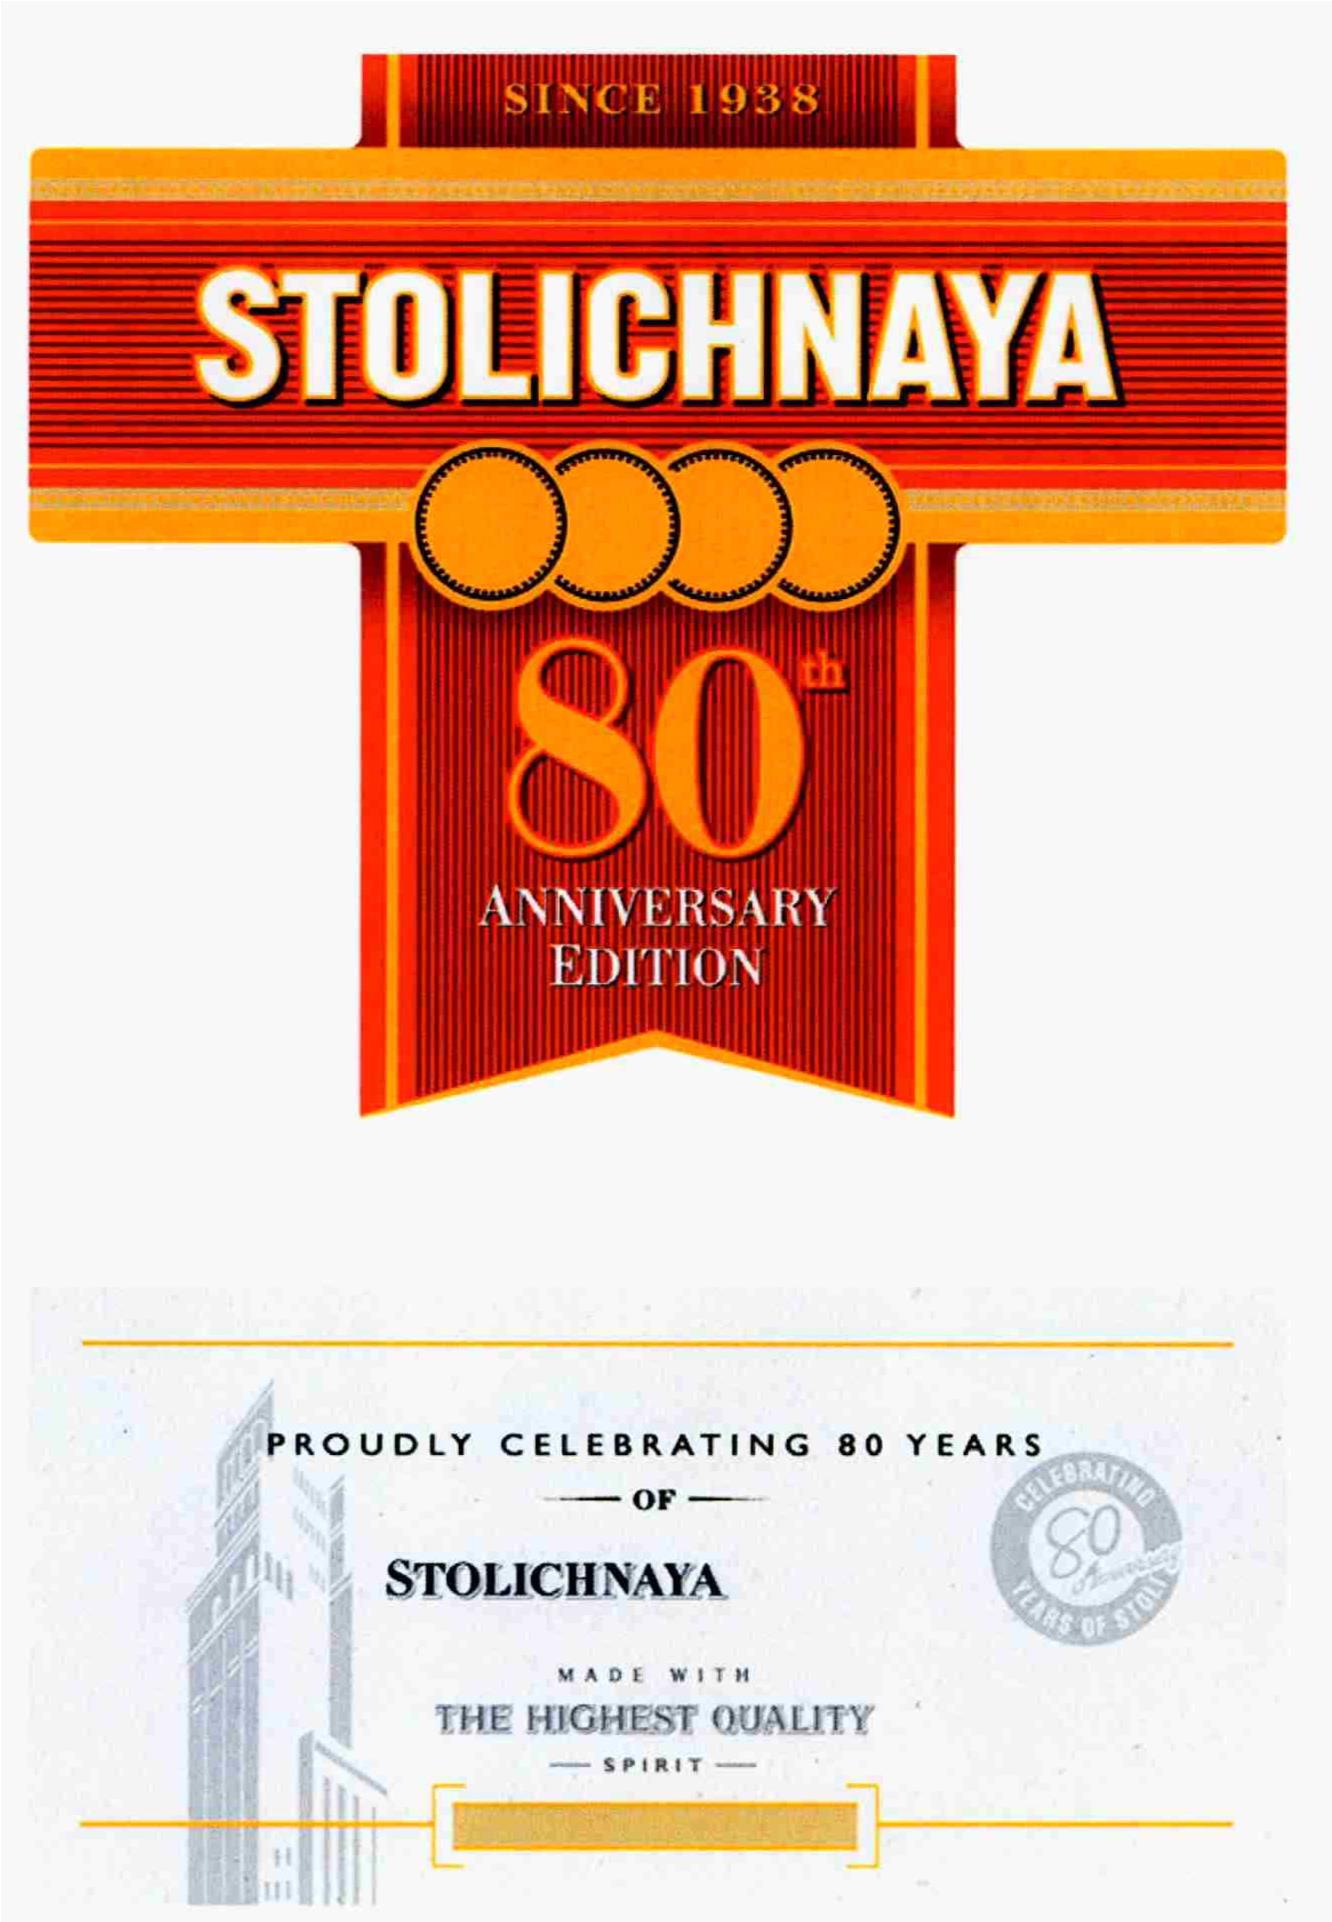  SINCE 1938 STOLICHNAYA 80TH ANNIVERSARYEDITION PROUDLY CELEBRATING 80 YEARS OF STOLICHNAYA MADE WITH THE HIGHEST QUALITY SPIRIT 